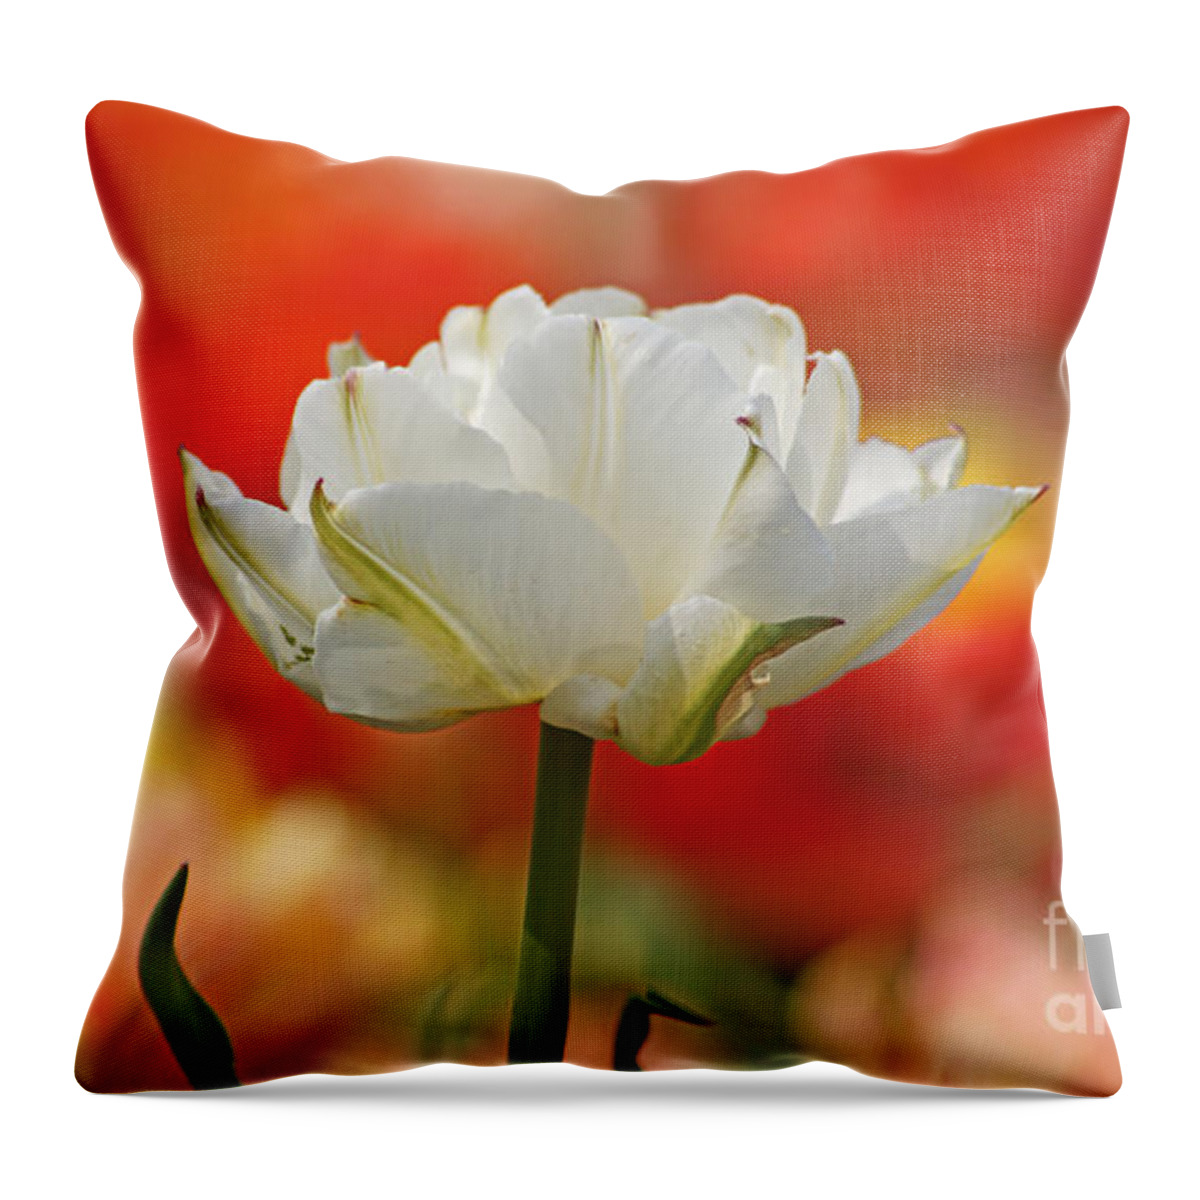 Tulip Throw Pillow featuring the photograph White Tulip Weisse gefuellte Tulpe by Eva-Maria Di Bella